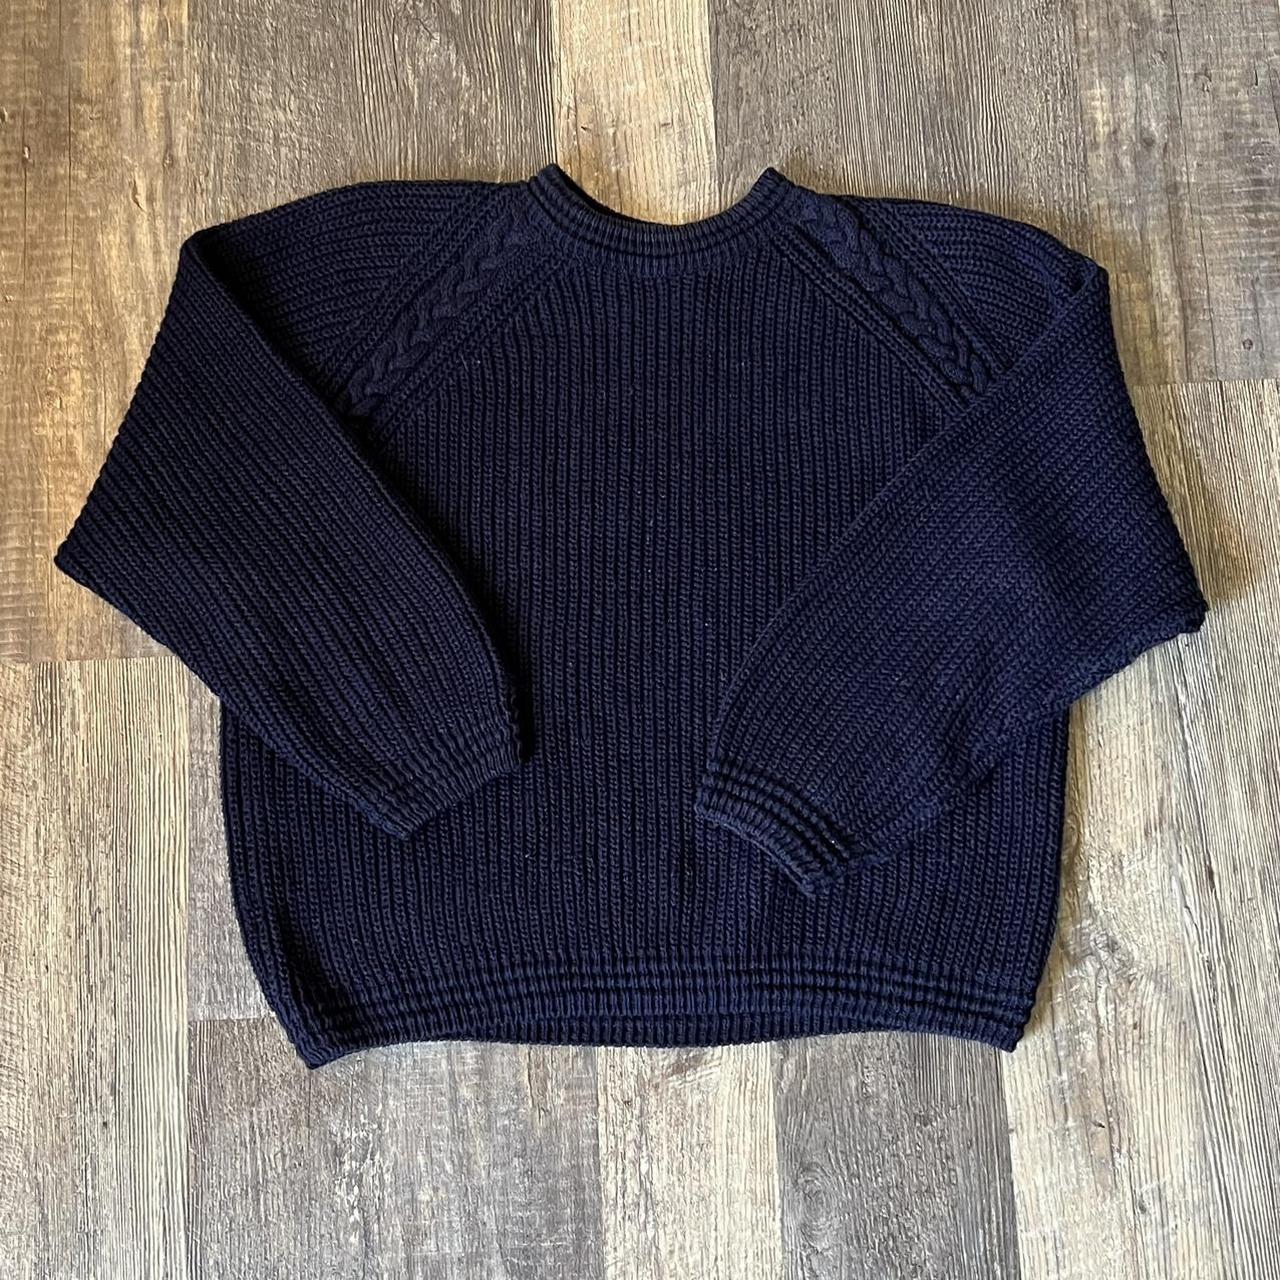 Vintage Basic Knit Sweater Size M but fits a little... - Depop